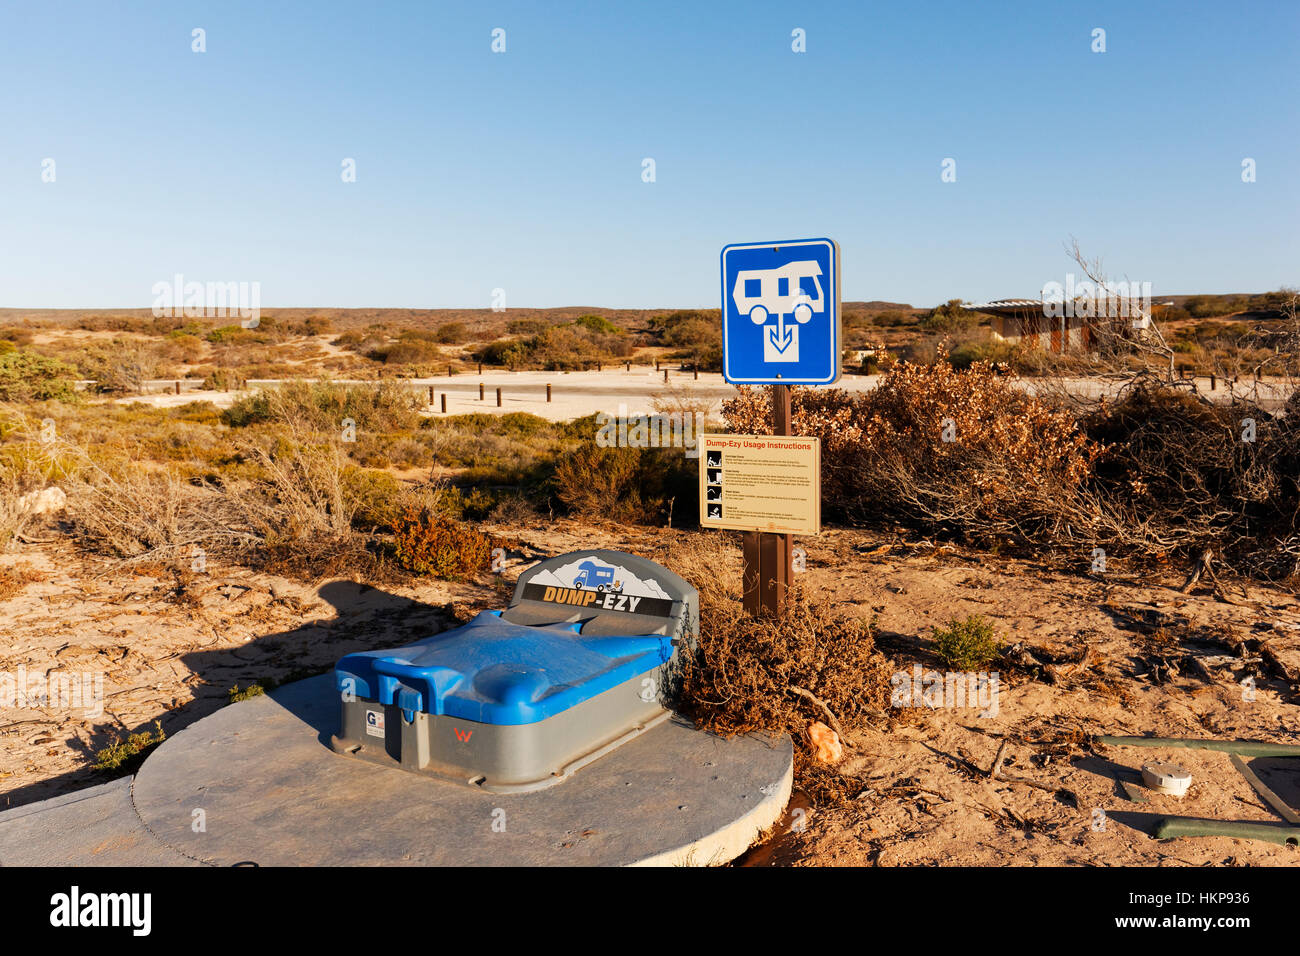 Dump-Ezy Toilet waste disposal for Caravans and mobile camping vehicles, Cape Range National Park, Western Australia. Stock Photo